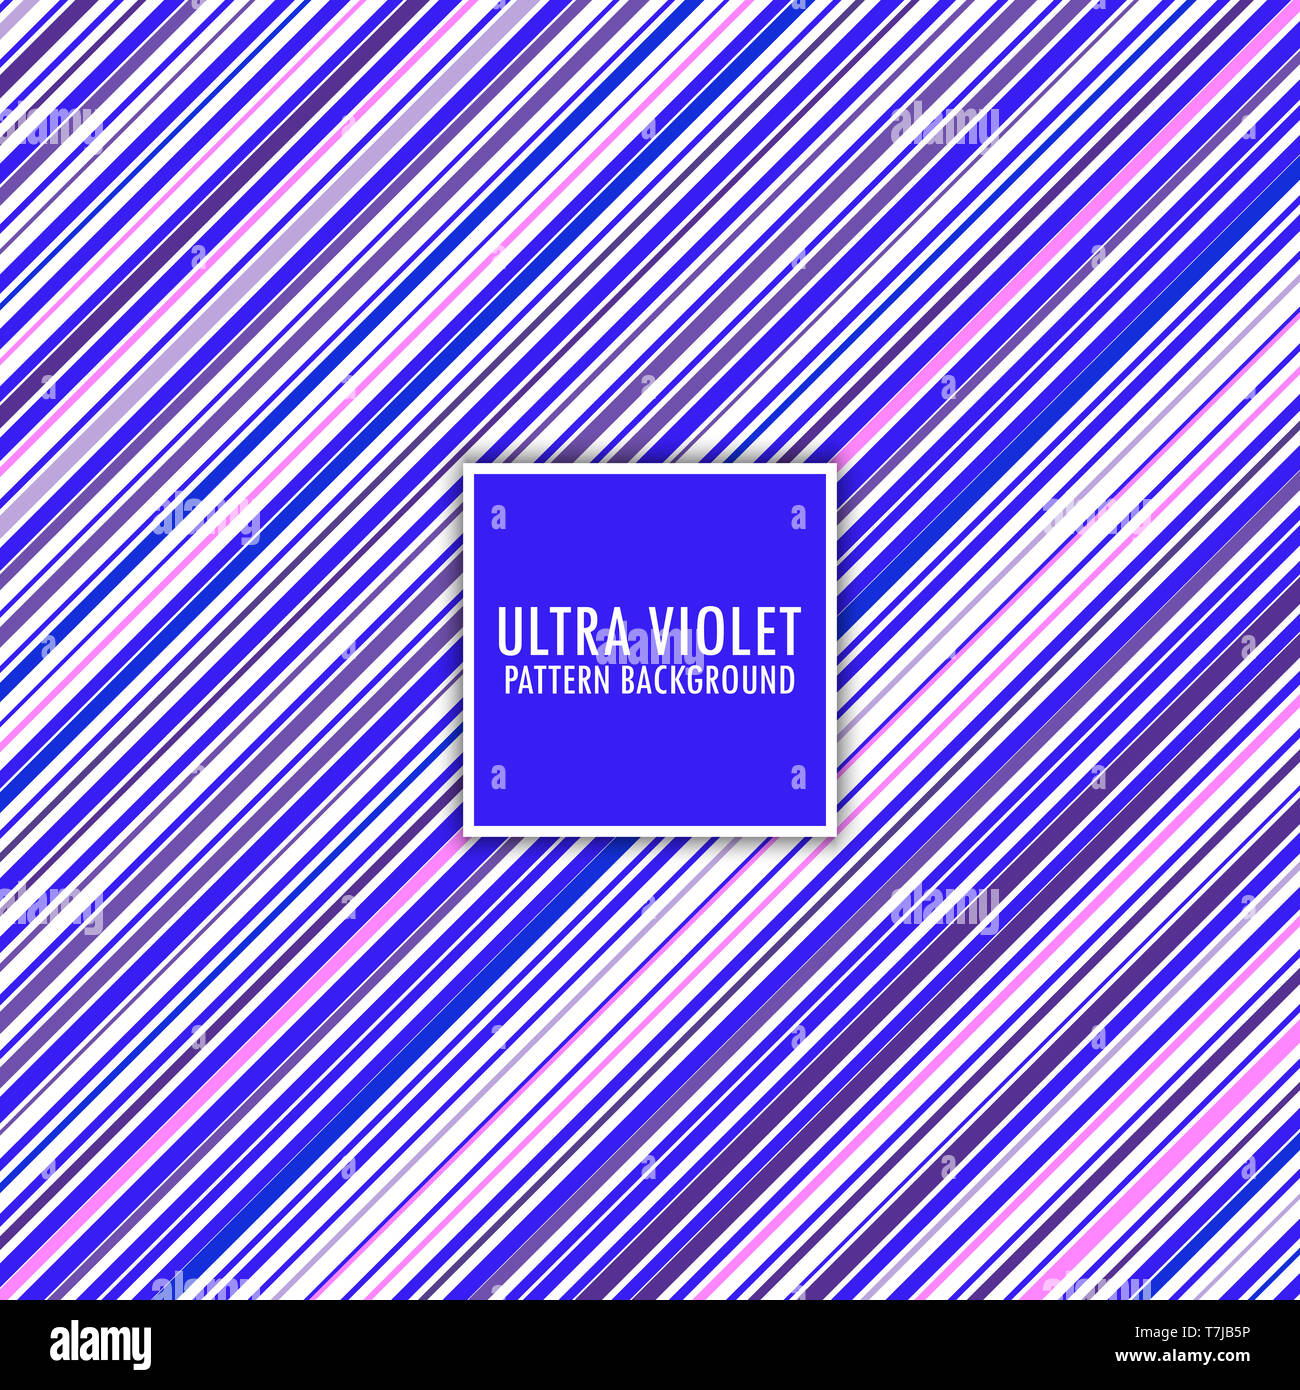 Retro striped background using ultra violet colour theme Stock Photo